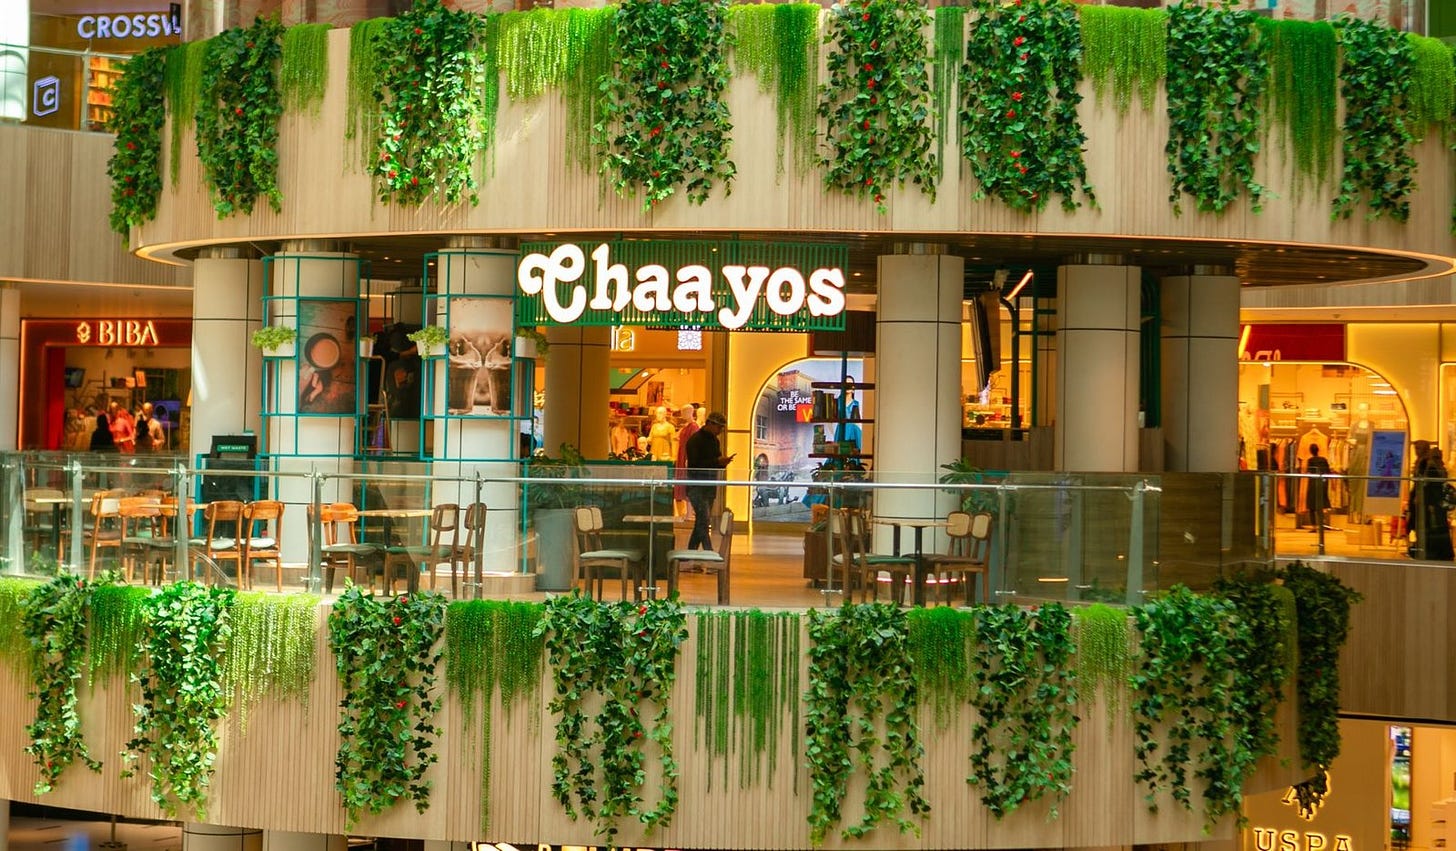 Chaayos – Forum Malls